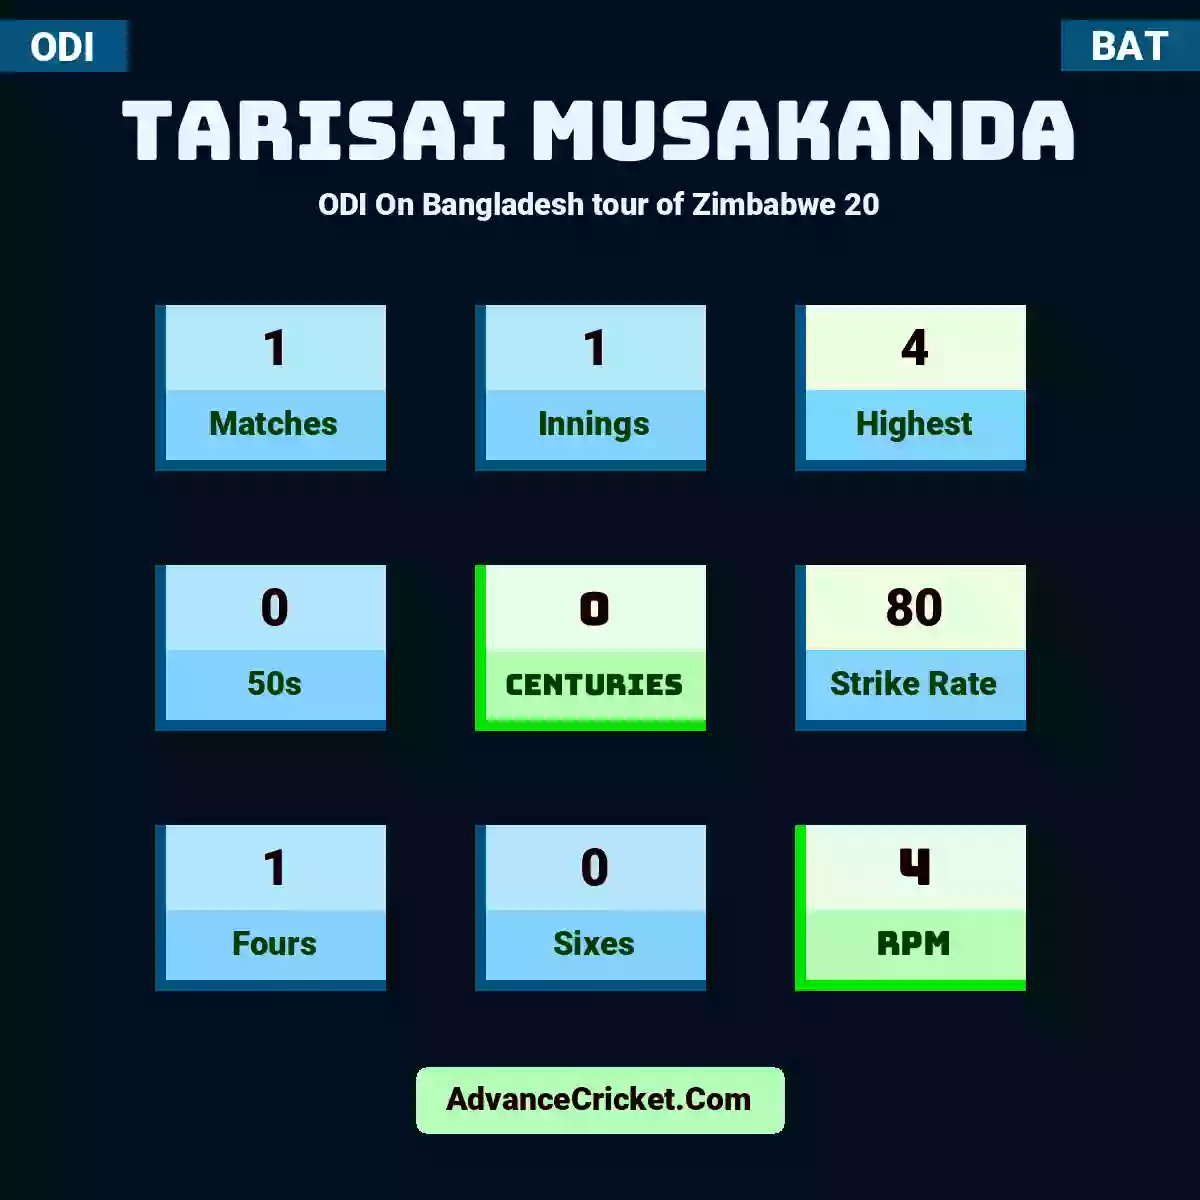 Tarisai Musakanda ODI  On Bangladesh tour of Zimbabwe 20, Tarisai Musakanda played 1 matches, scored 4 runs as highest, 0 half-centuries, and 0 centuries, with a strike rate of 80. T.Musakanda hit 1 fours and 0 sixes, with an RPM of 4.